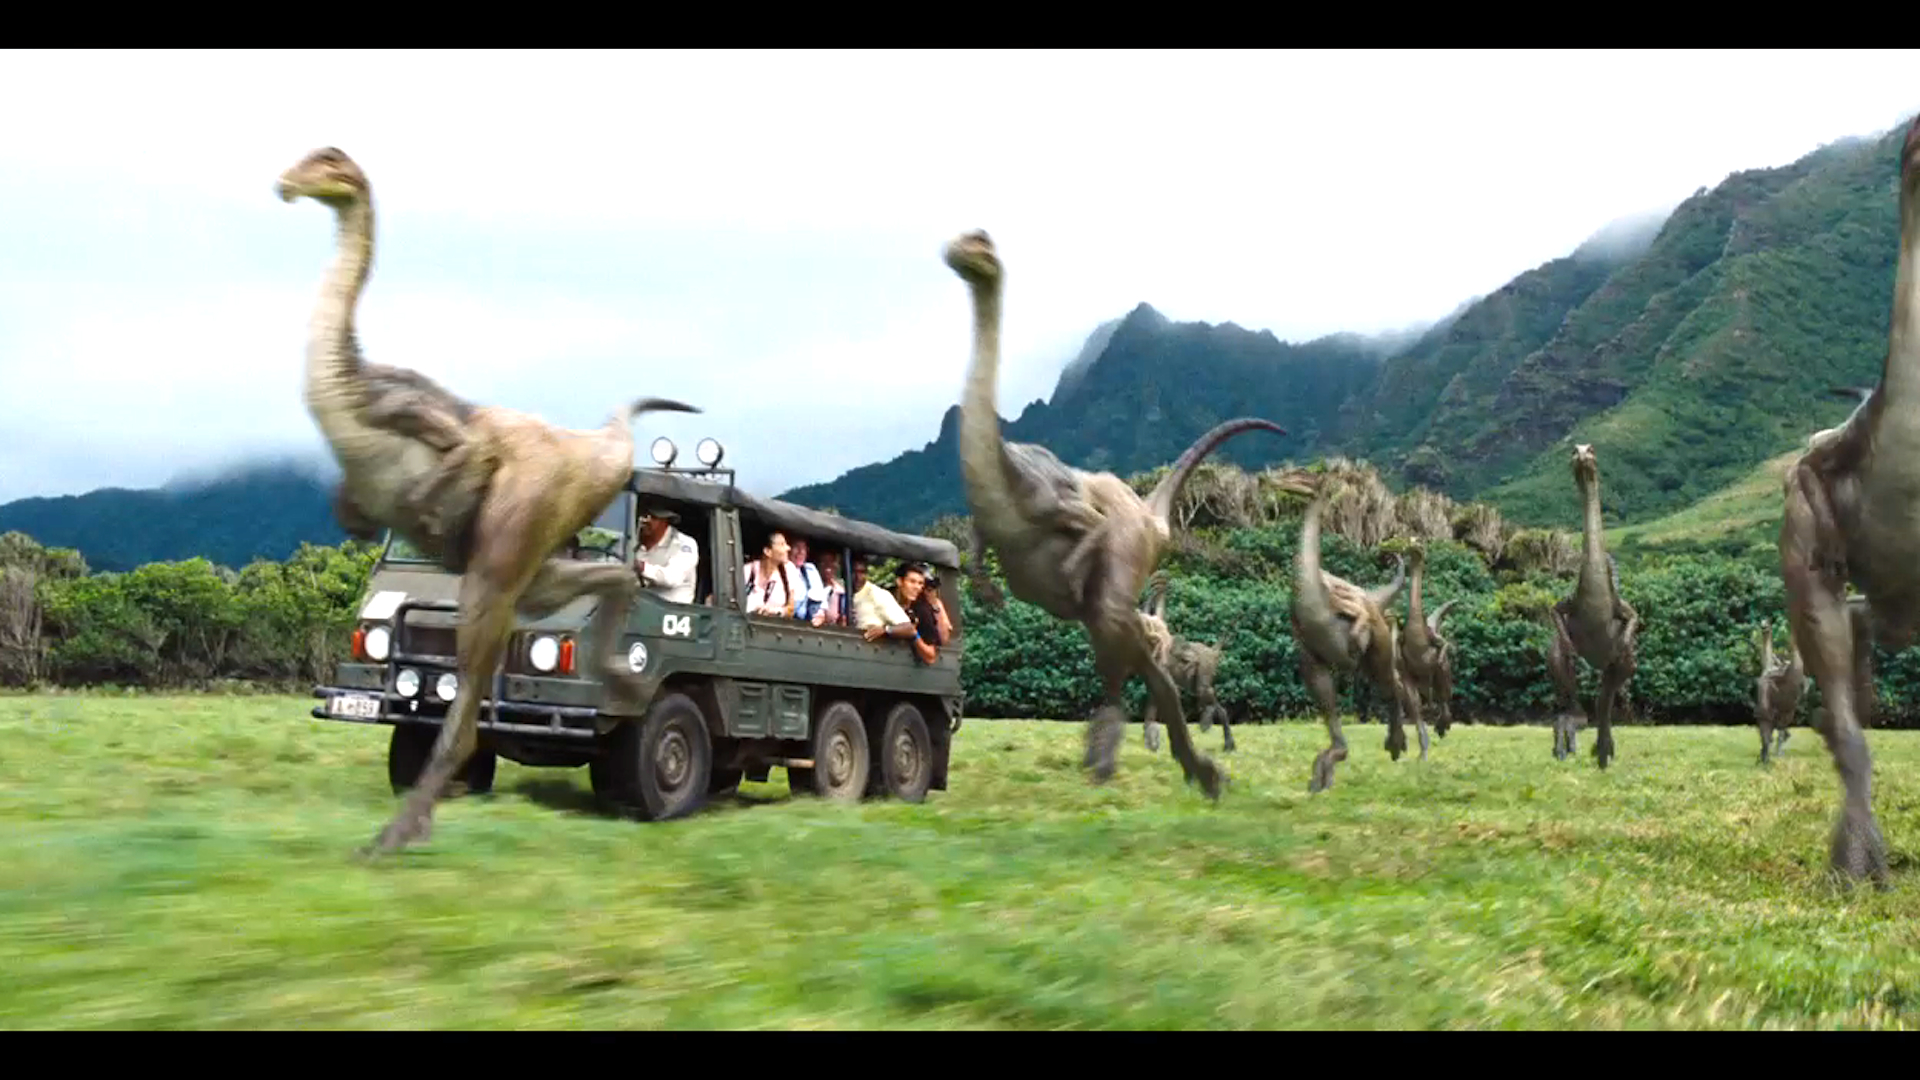 SCIFI.radio 1st Look: ‘Jurassic World’ Trailer 2